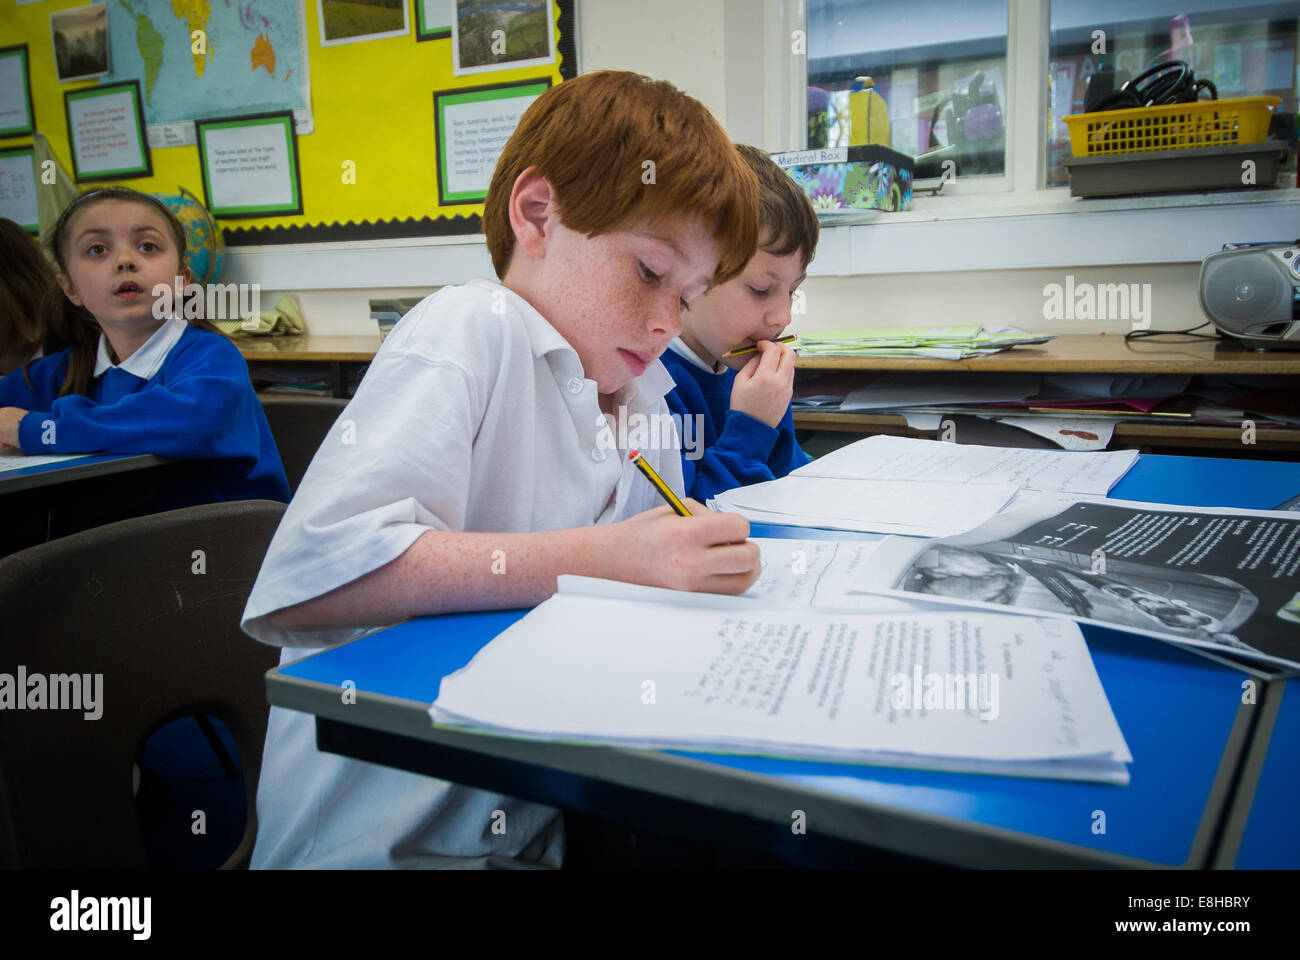 Children in Primary school classroom in Oxfordshire,UK Stock Photo